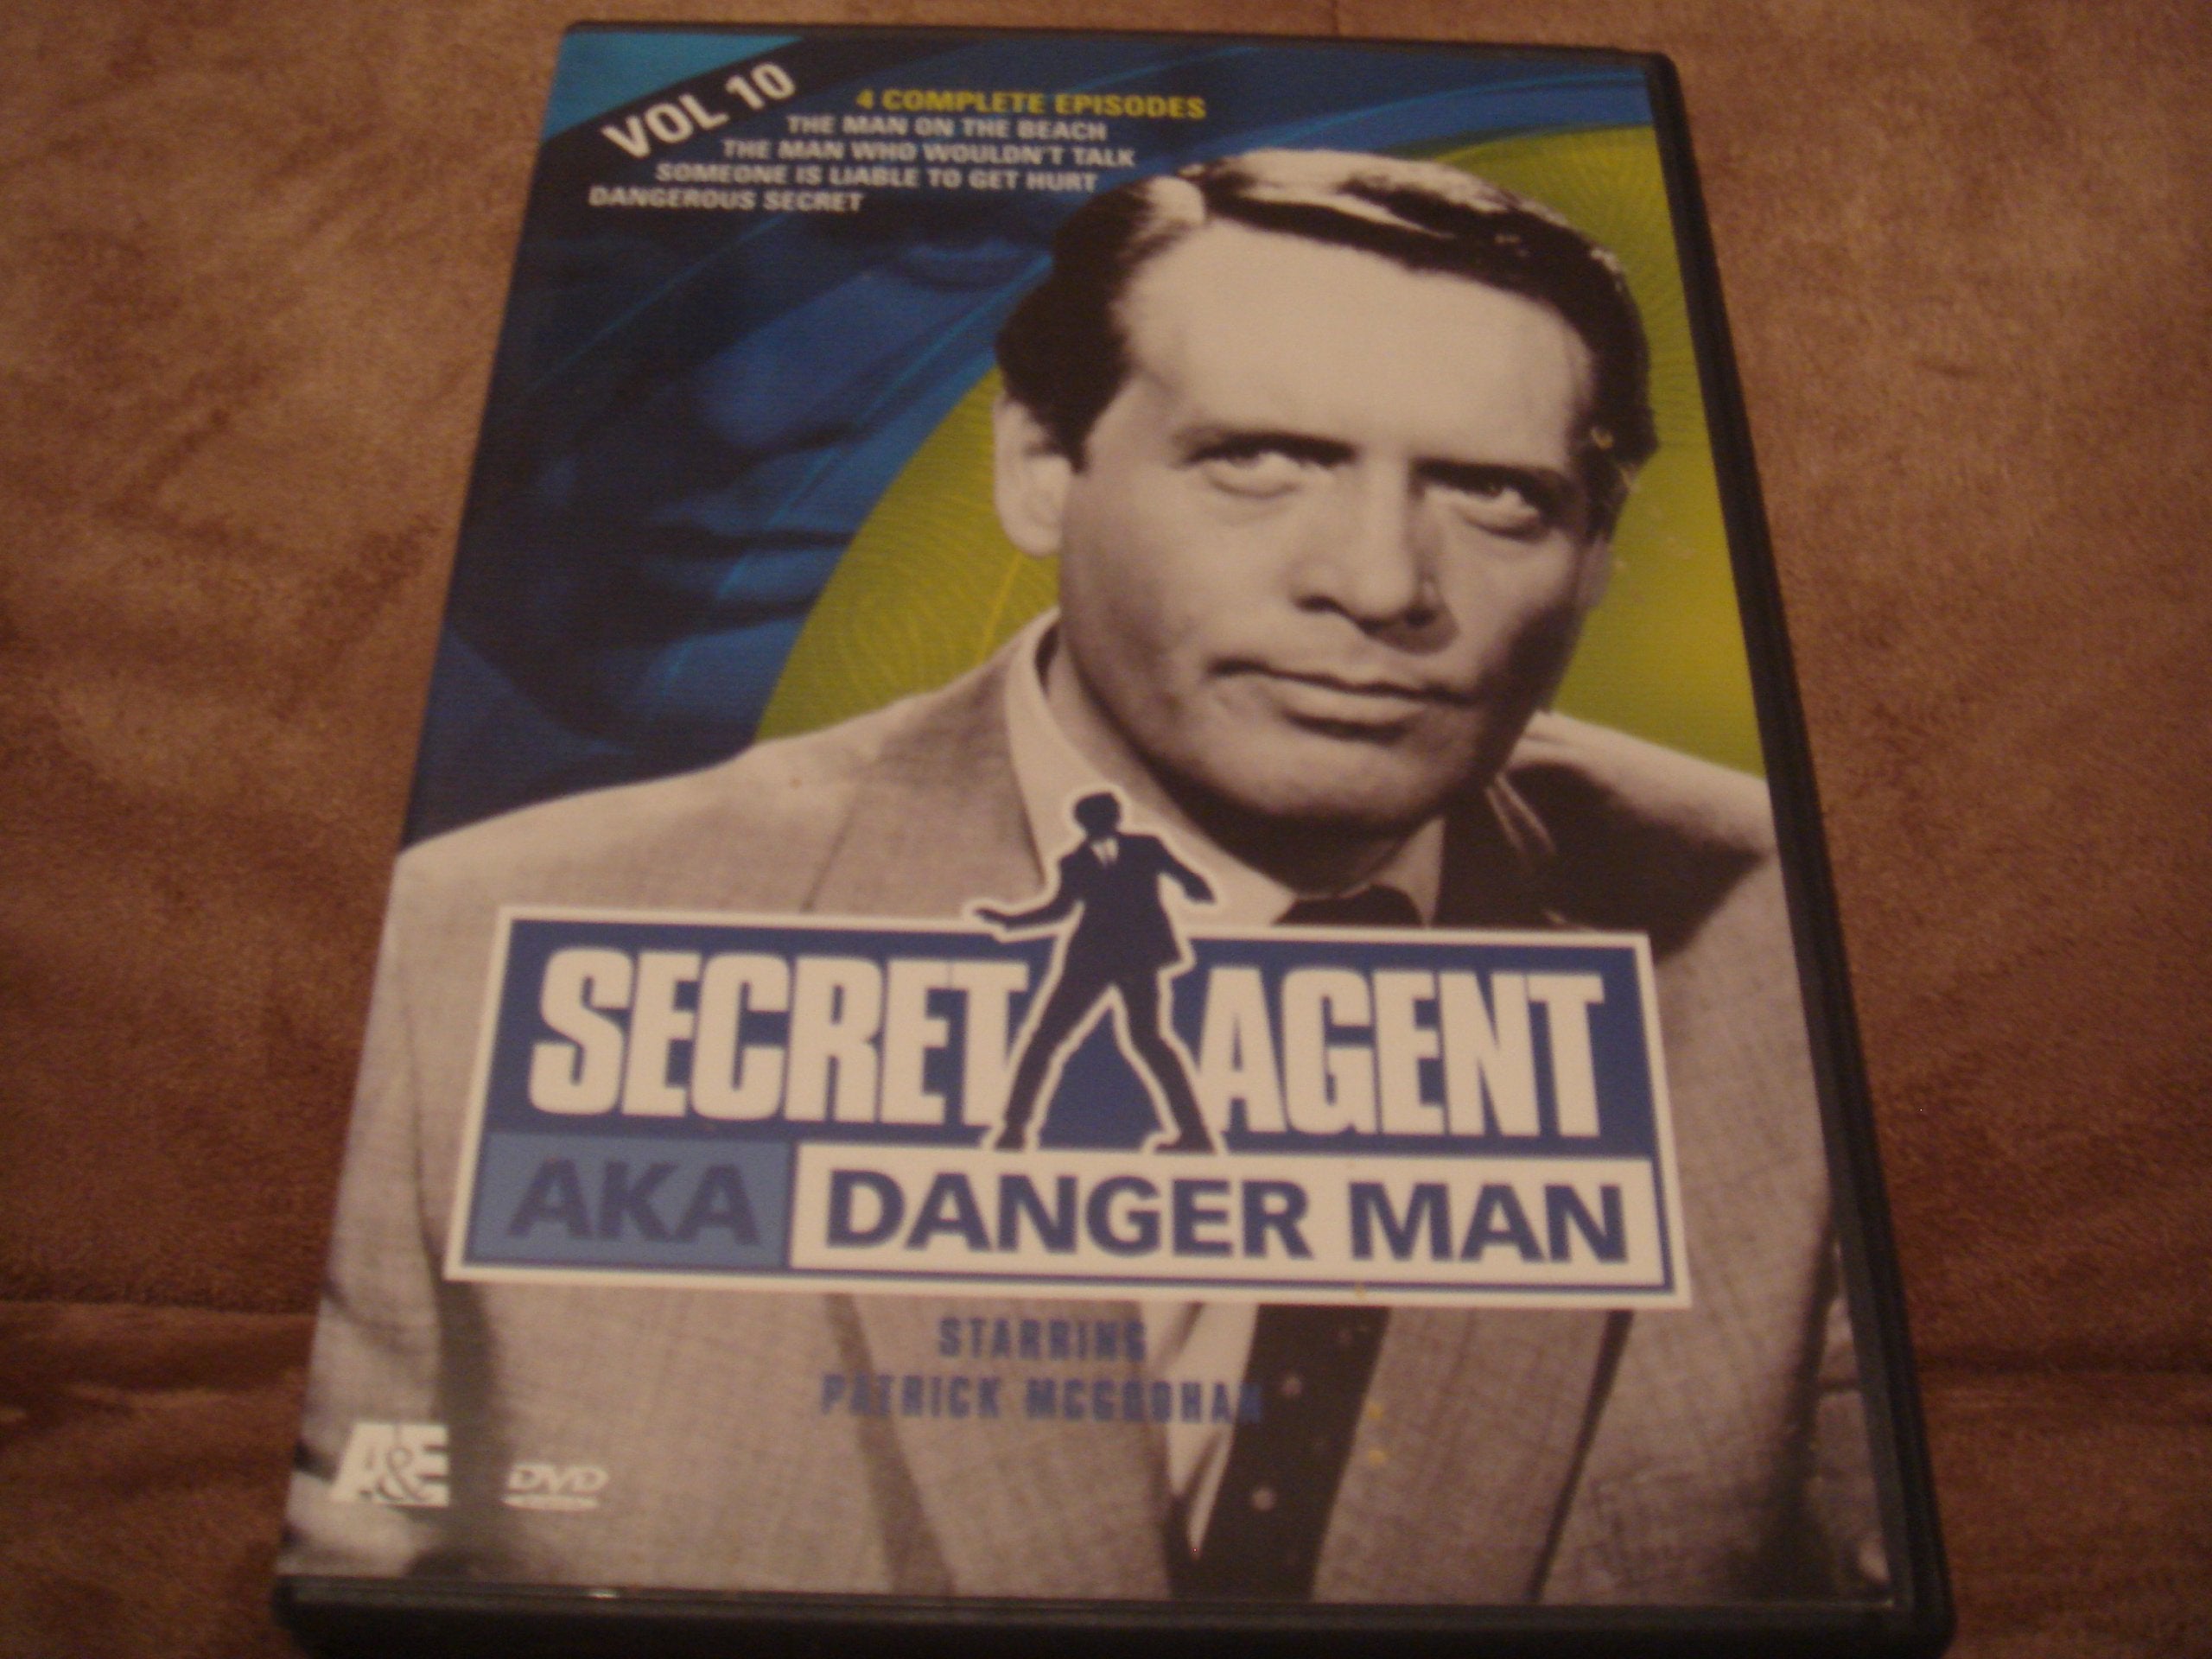 Secret Agent (aka Danger Man): The Complete Series